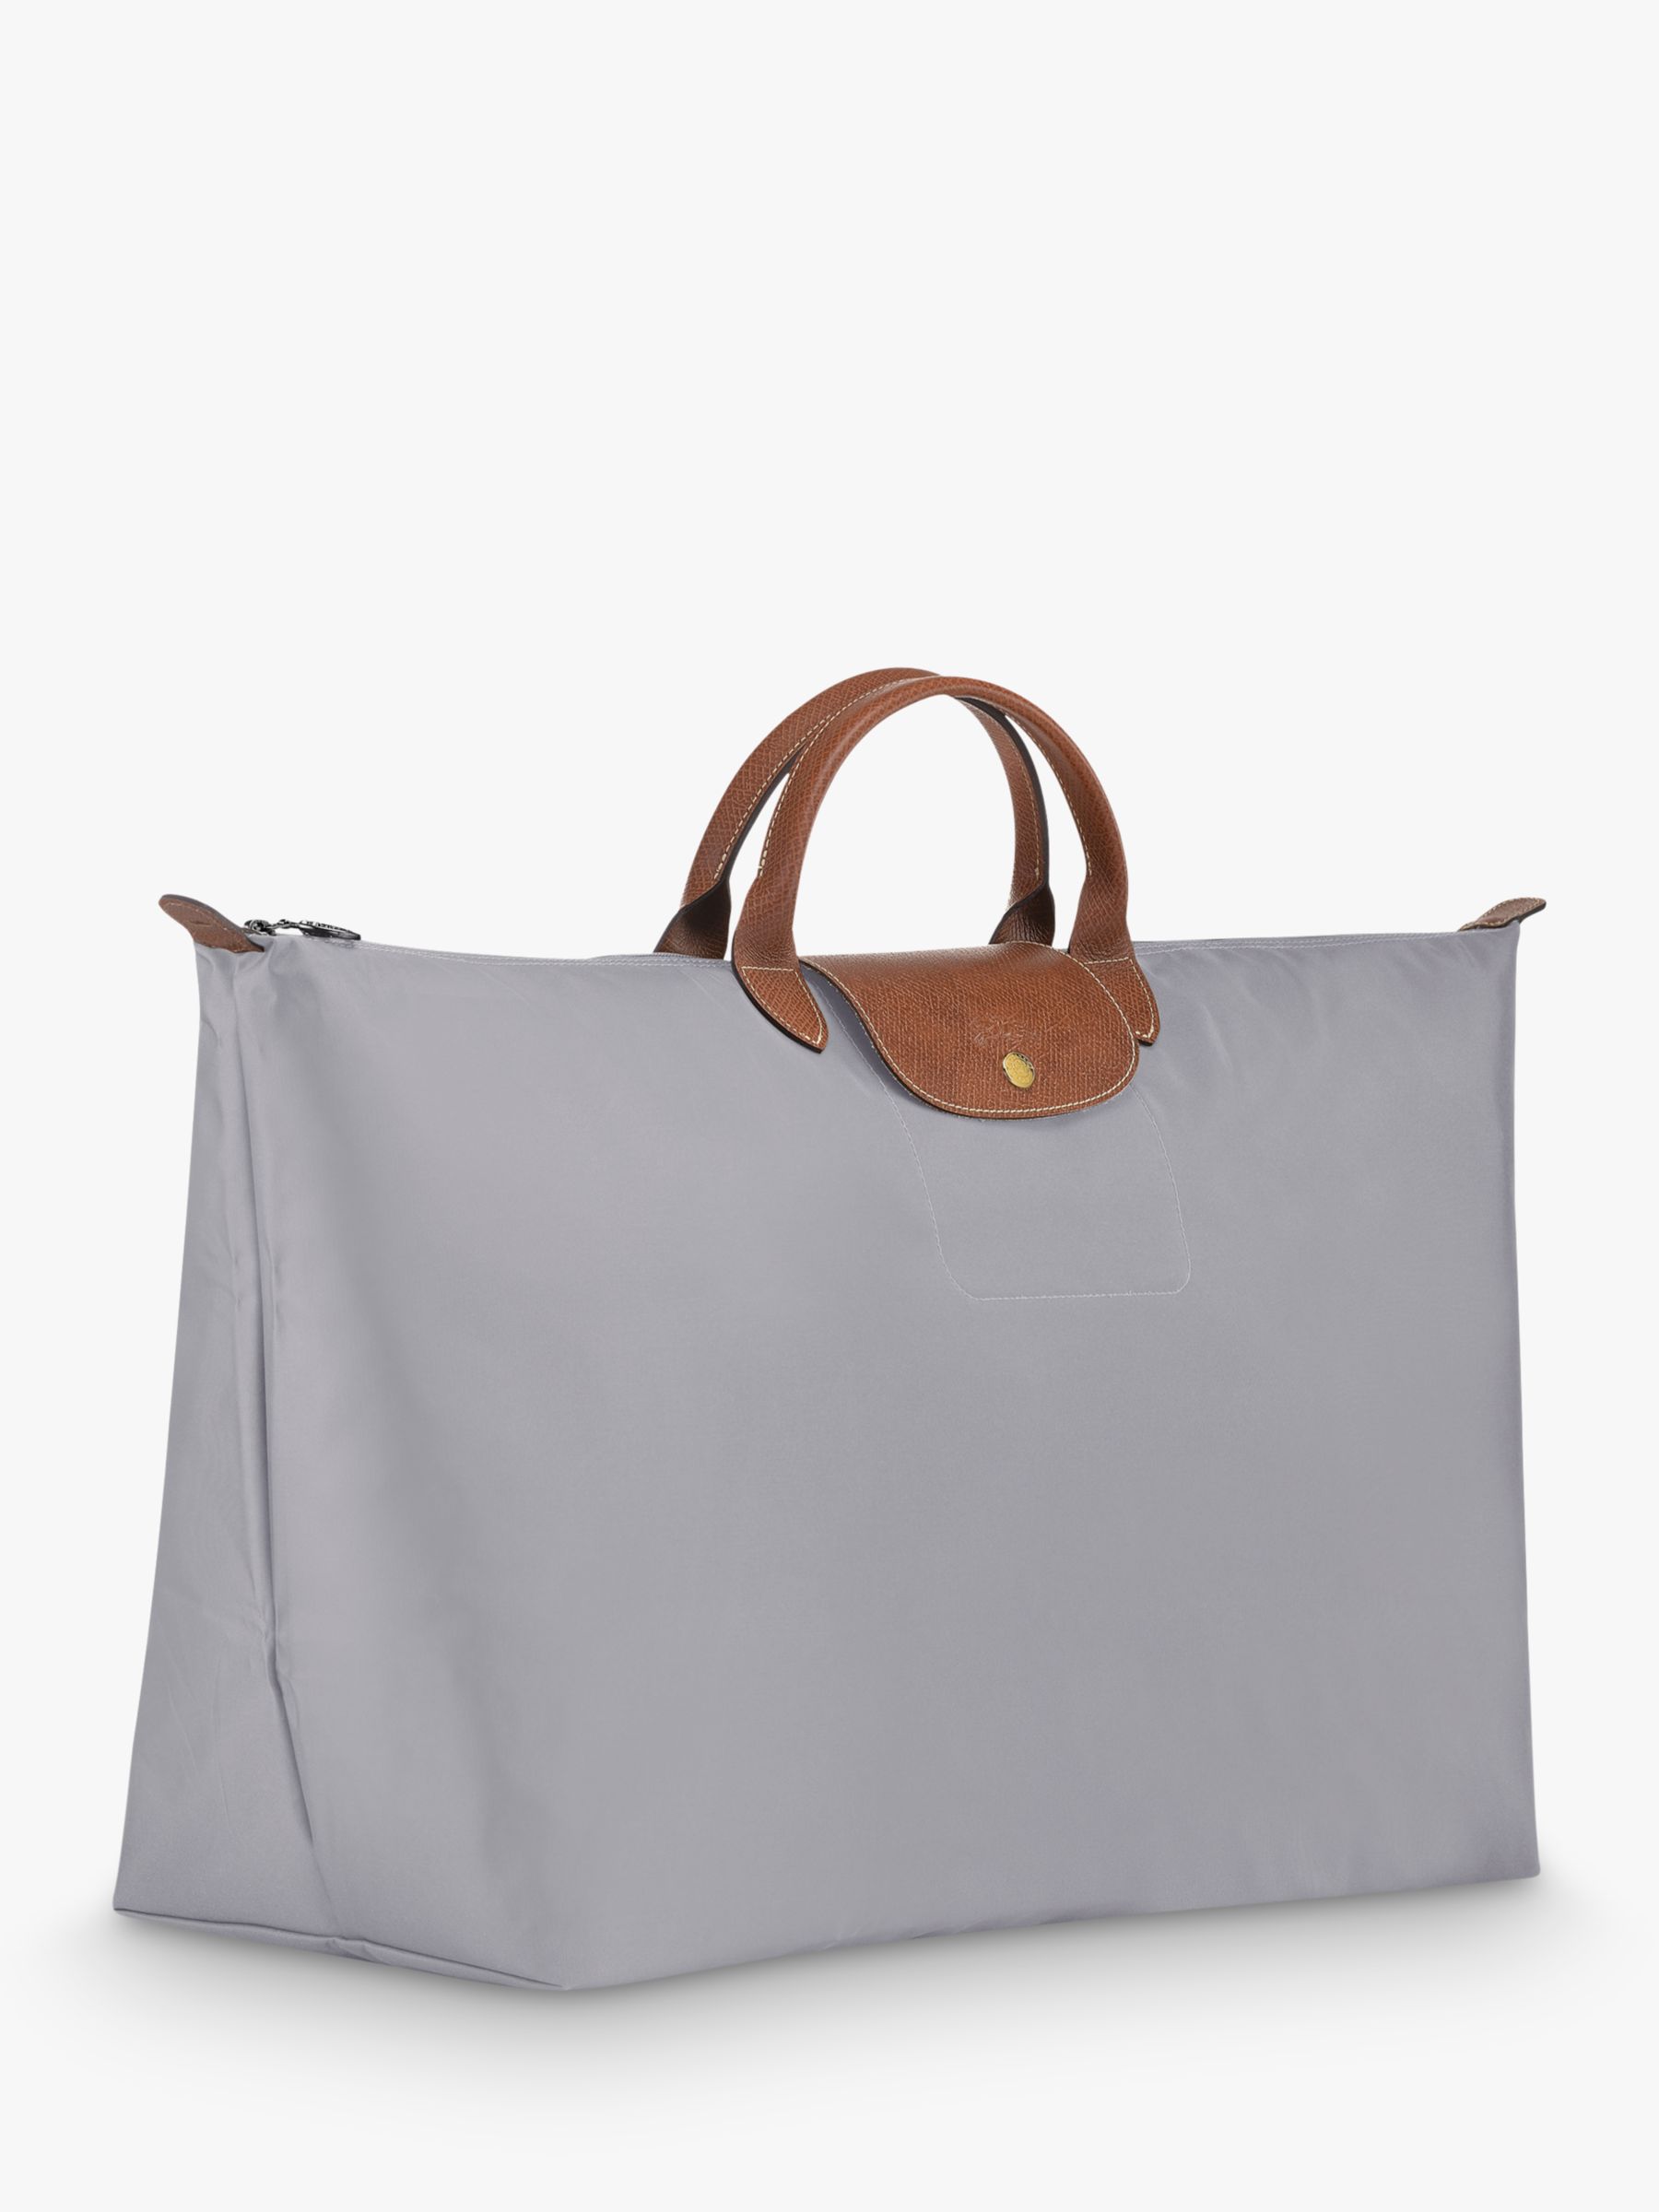 Longchamp Le Pliage Original XL Travel Bag, Grey at John Lewis & Partners